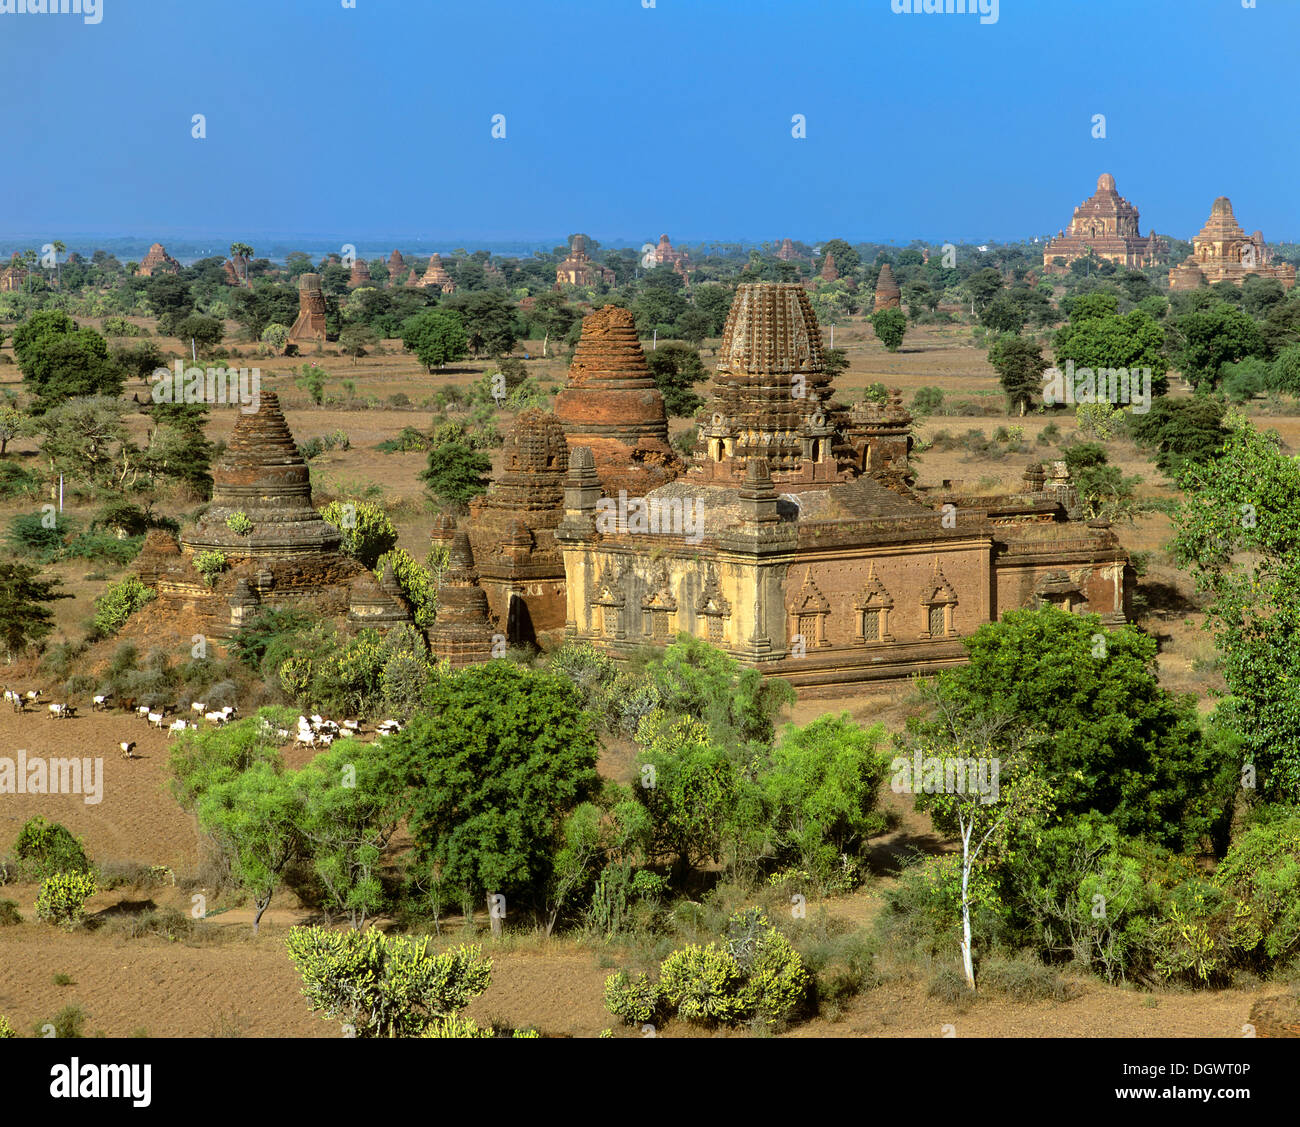 Field with ruins of Buddhist pagodas and temples, Ebene von Pagan, Bagan, Mandalay Division, Myanmar, Burma Stock Photo